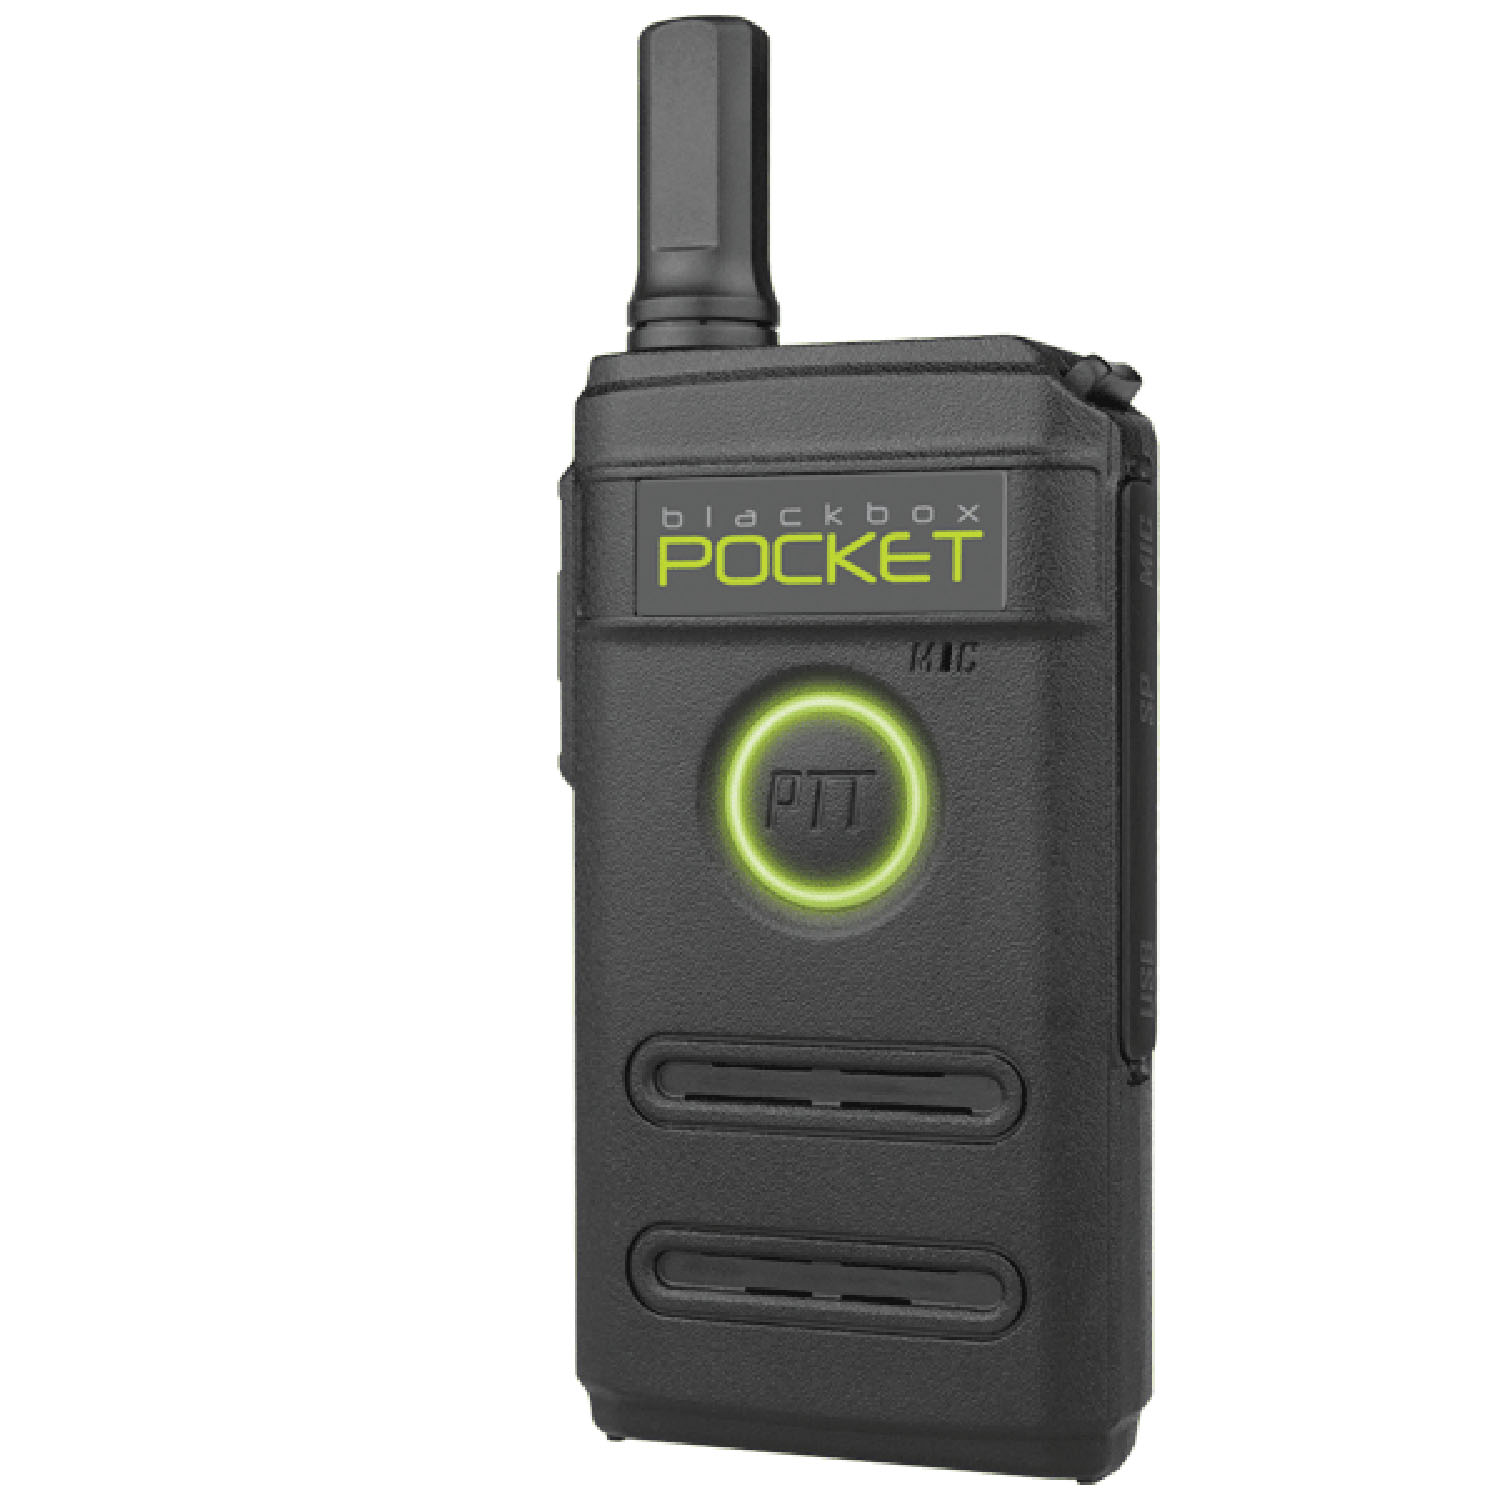 Klein - Pocket 16 Channel 1.5 Watt Uhf  (400-470 Mhz) Compact Hand Held Radio With Vox, Scramble & Scan Function